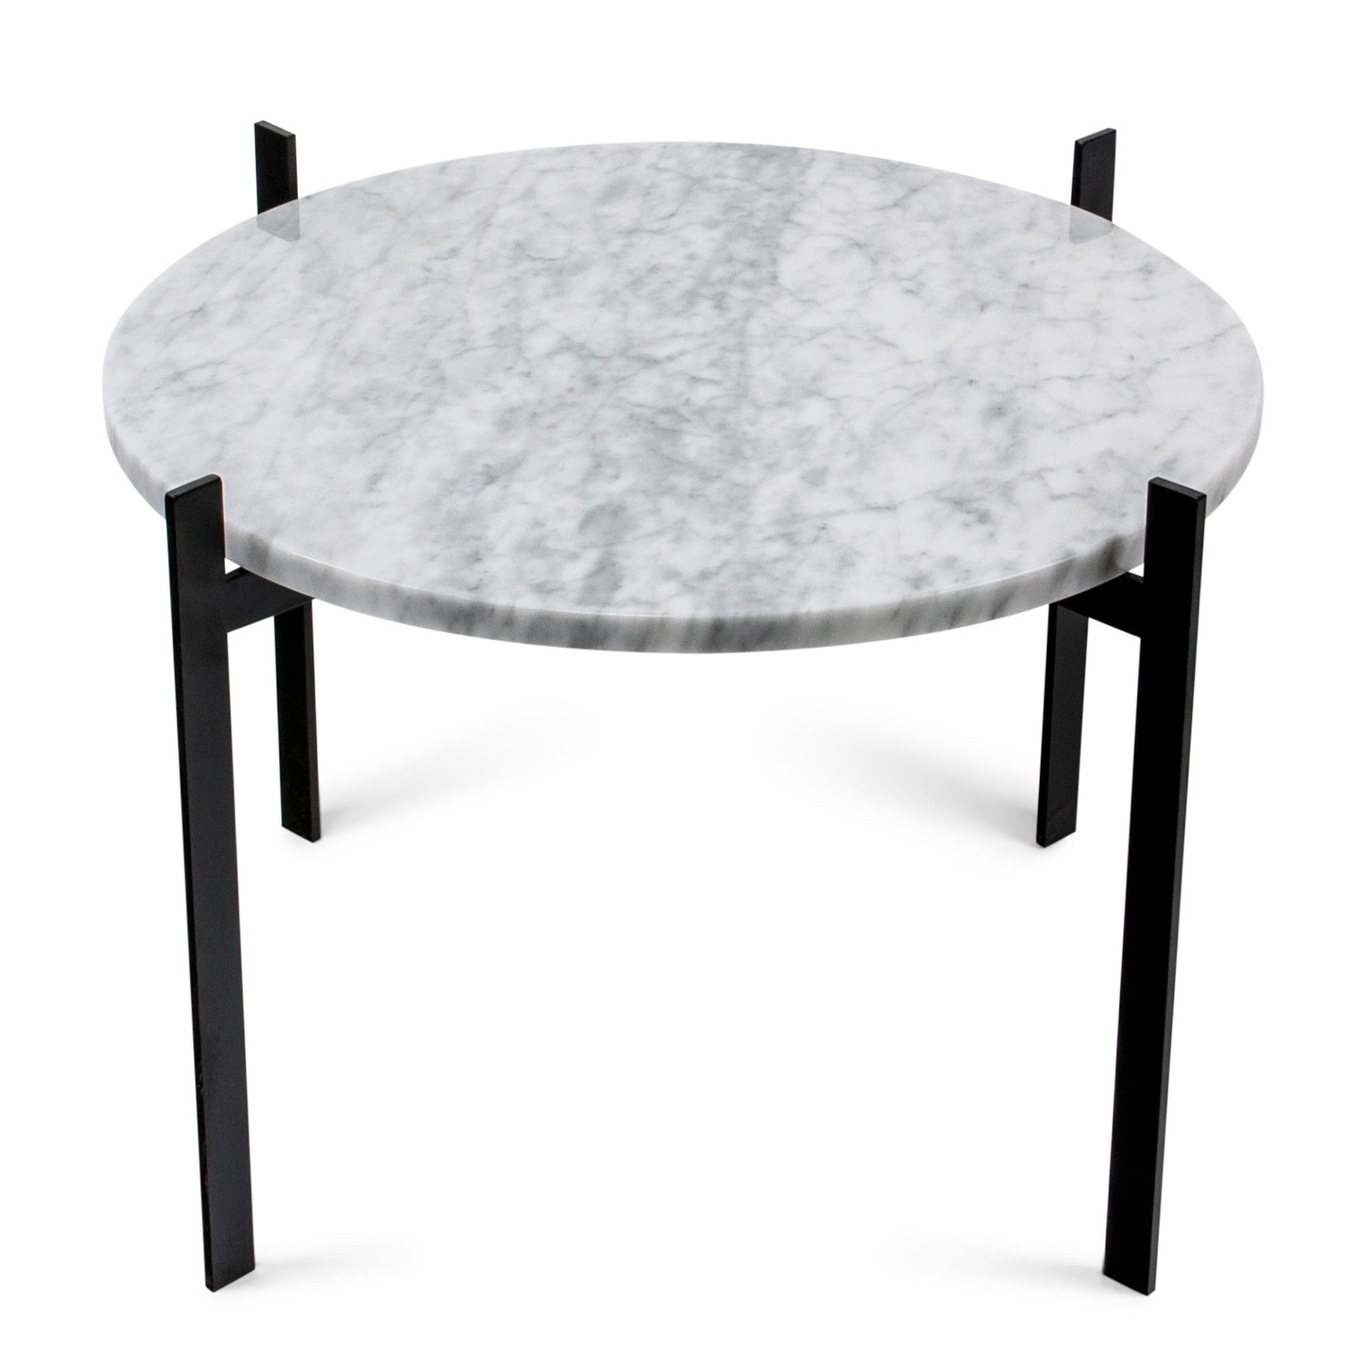 Single Deck Table, Black Base, White Marble